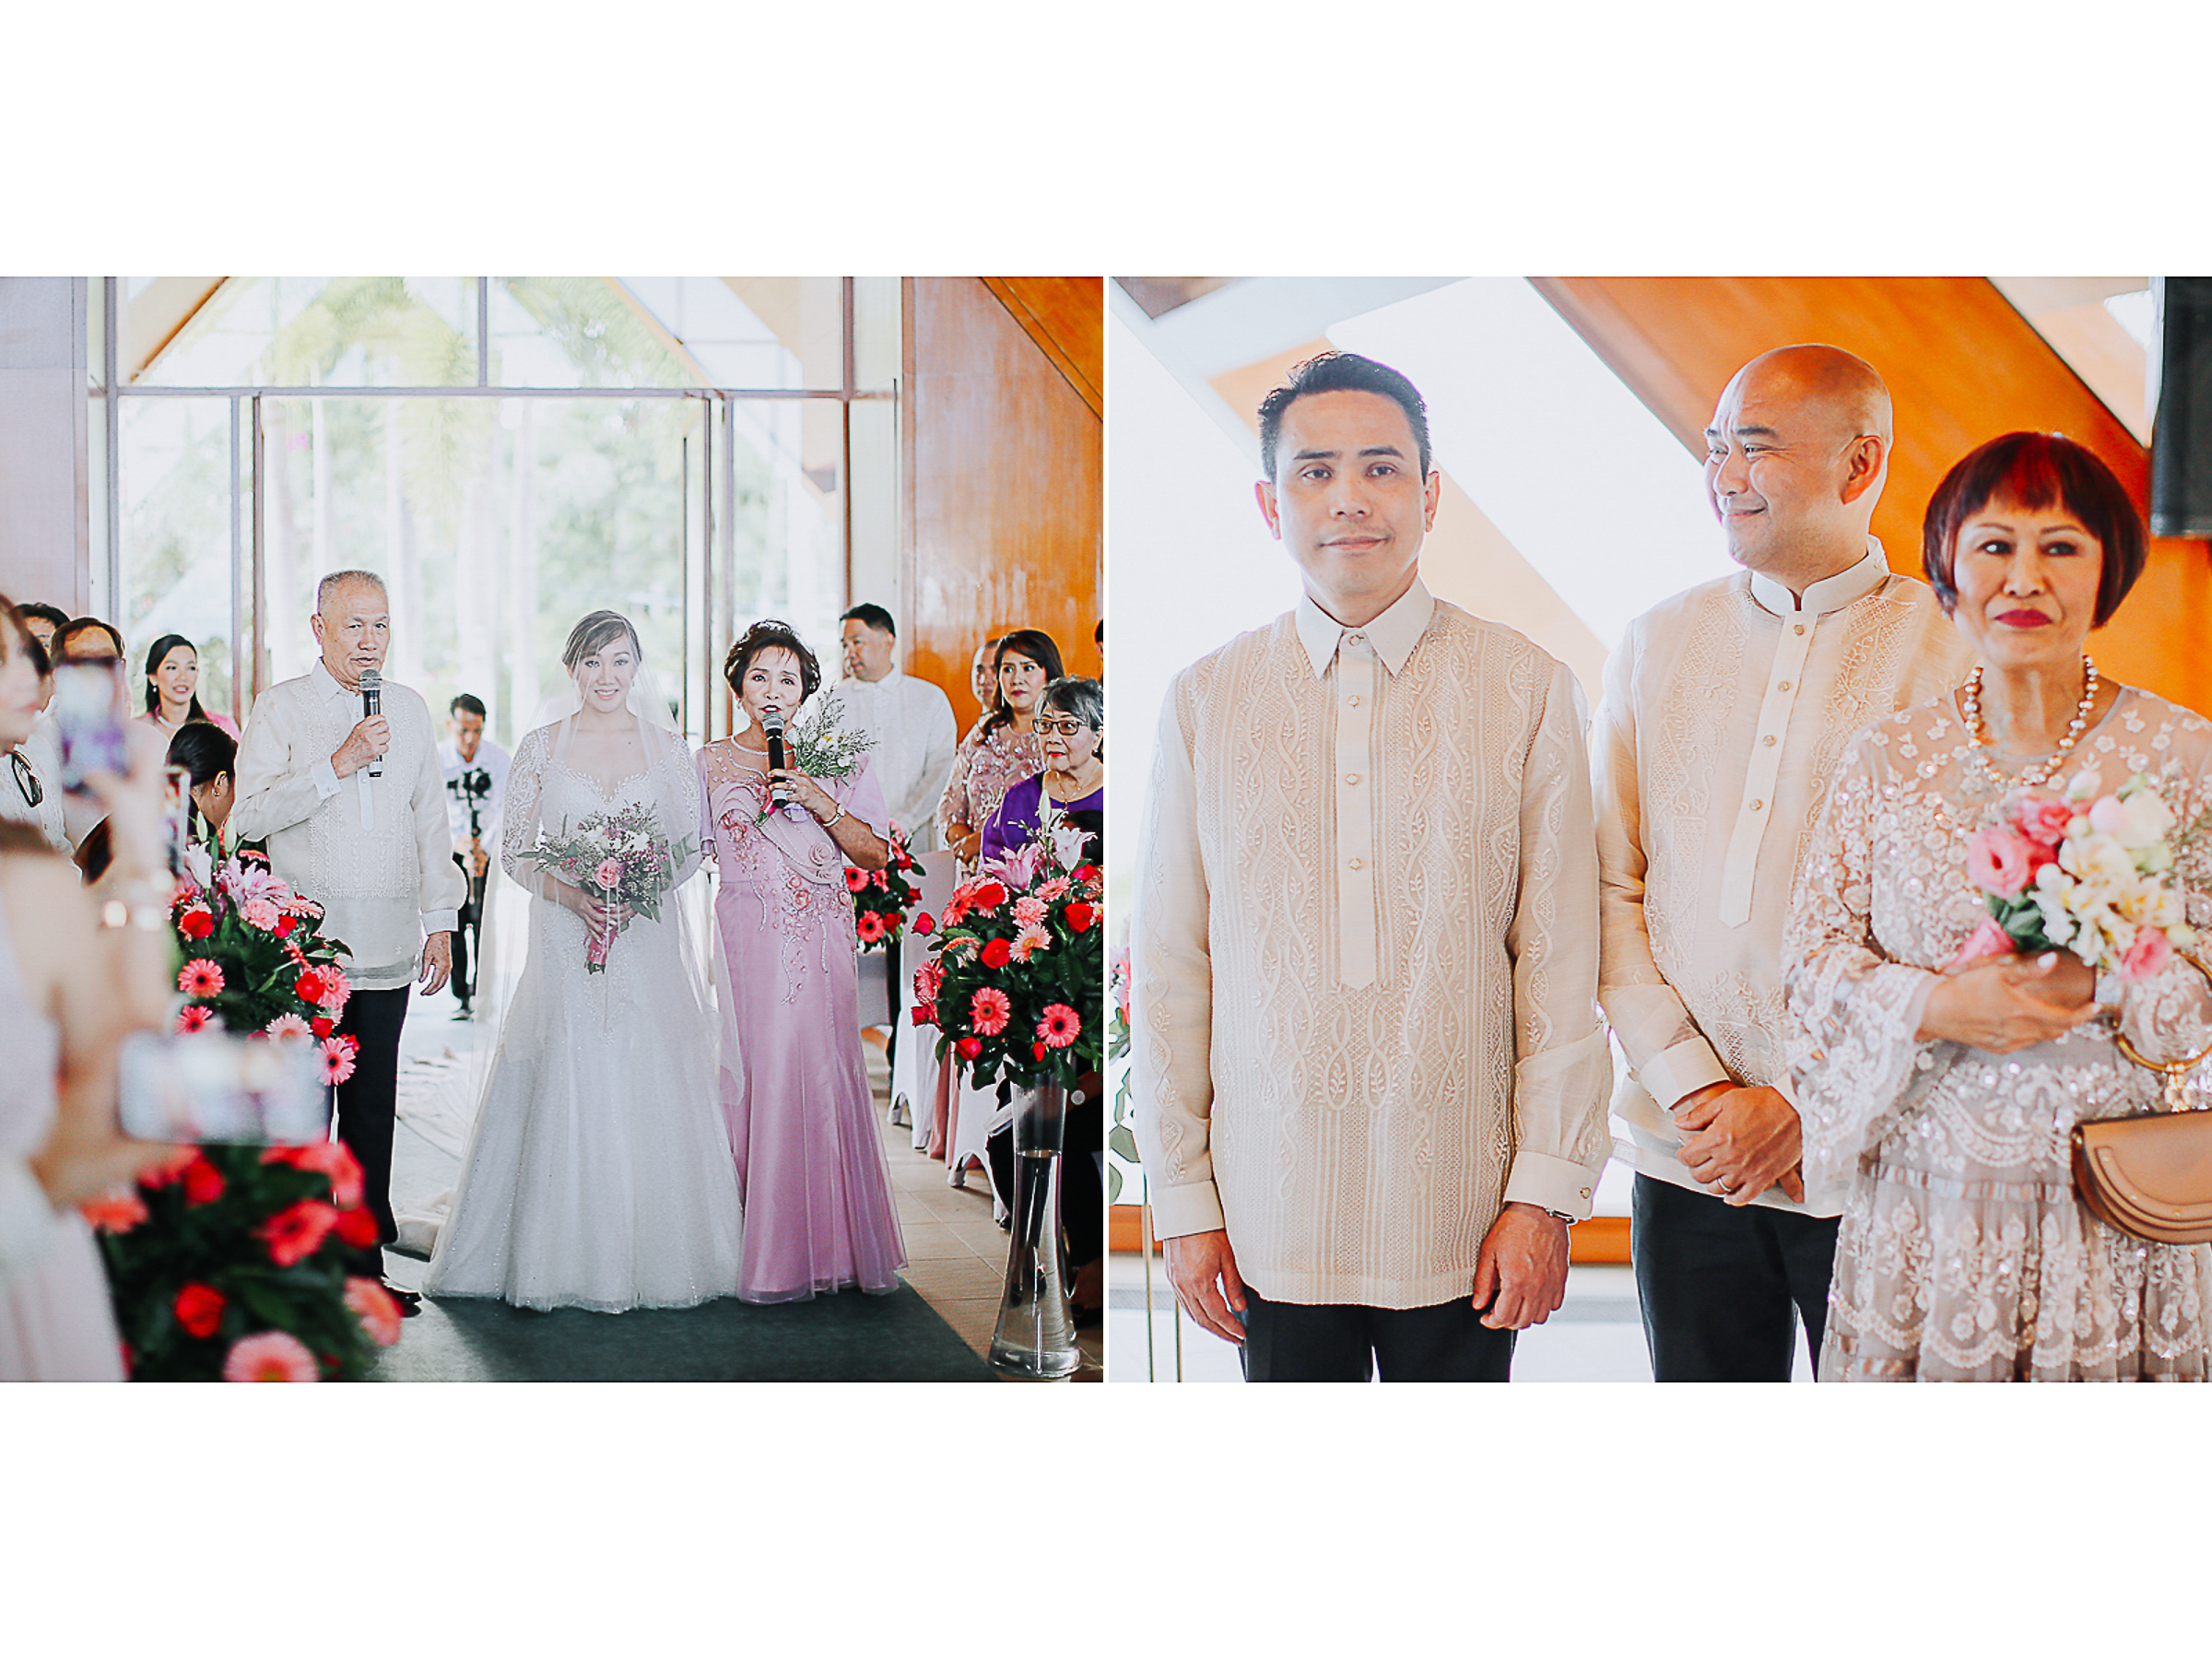 shang mactan wedding0045 - Coleen & Seigfred's Shangrila Mactan Cebu Destination Wedding